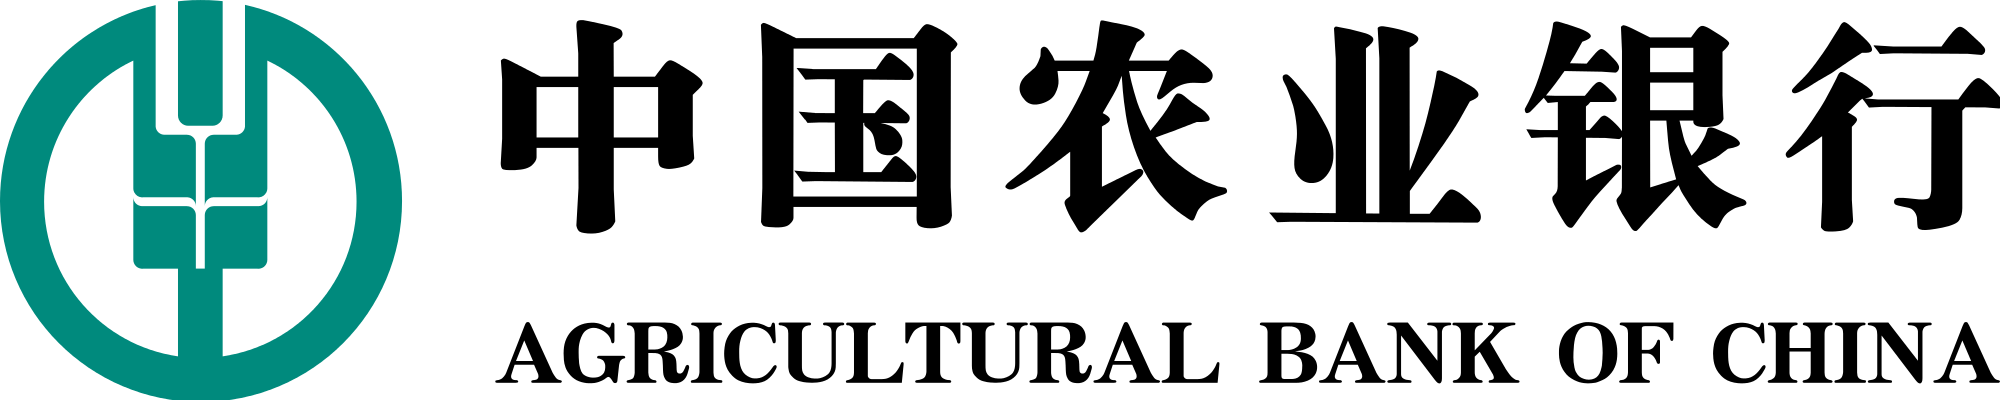 Bank of China Logo - File:Agricultural Bank of China logo.svg - Wikimedia Commons